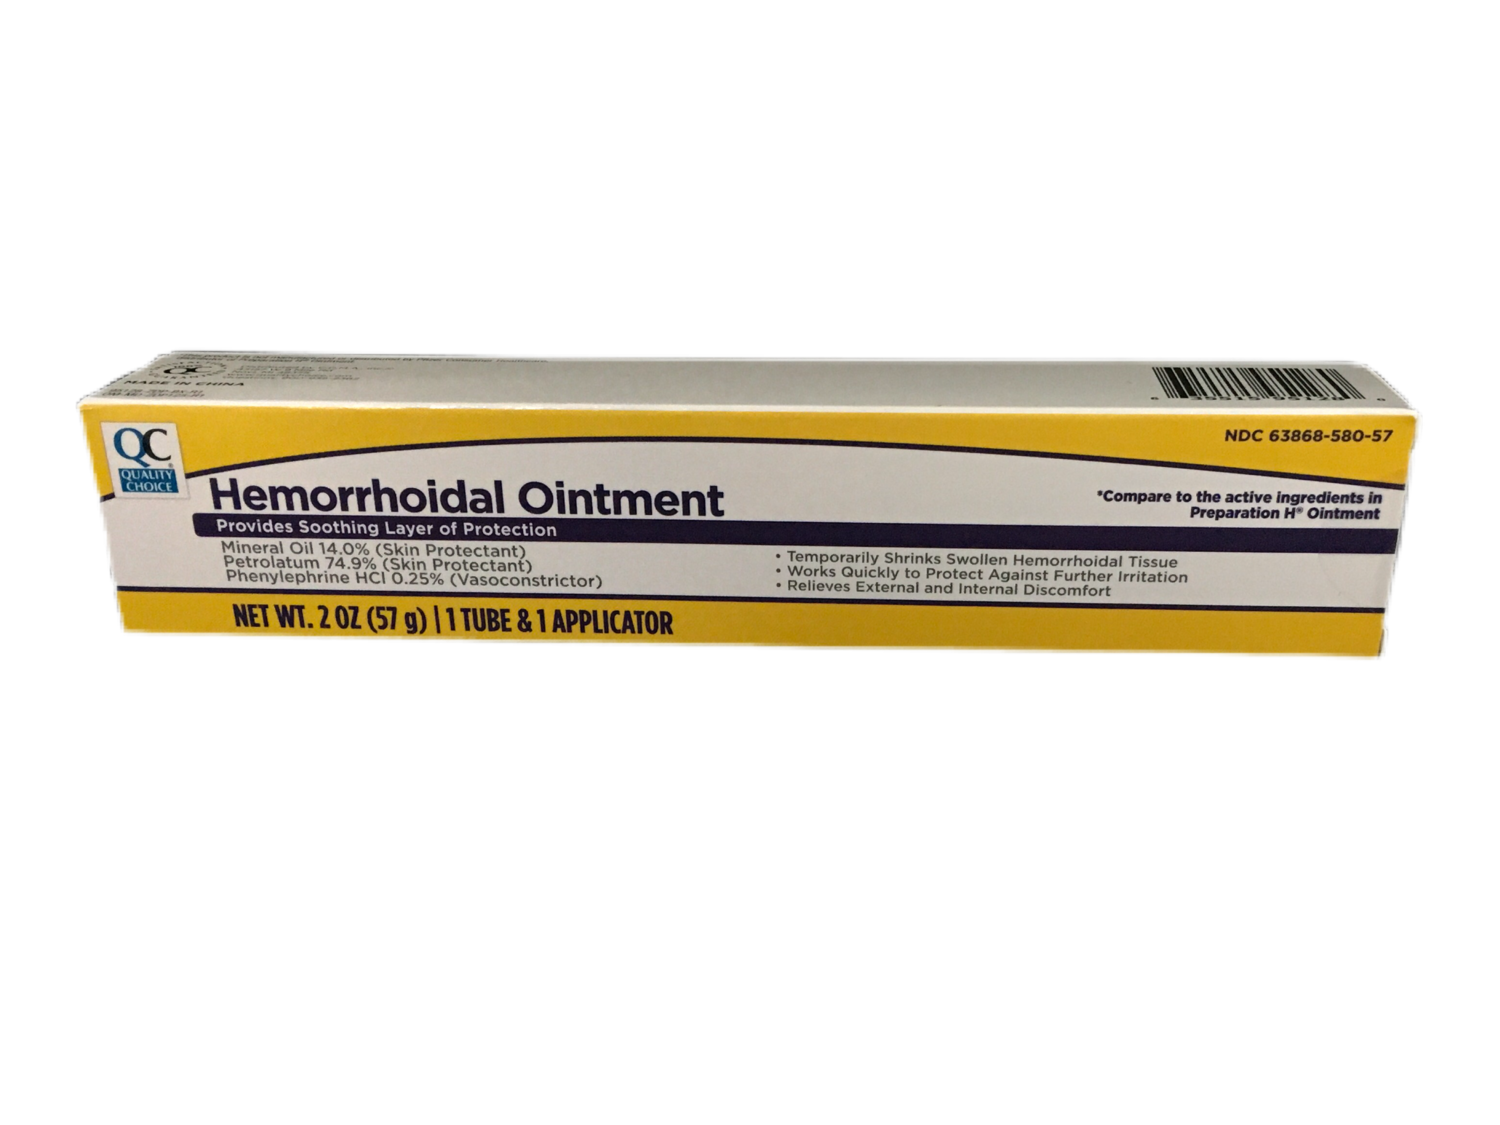 QC Hemorrhoidal Ointment